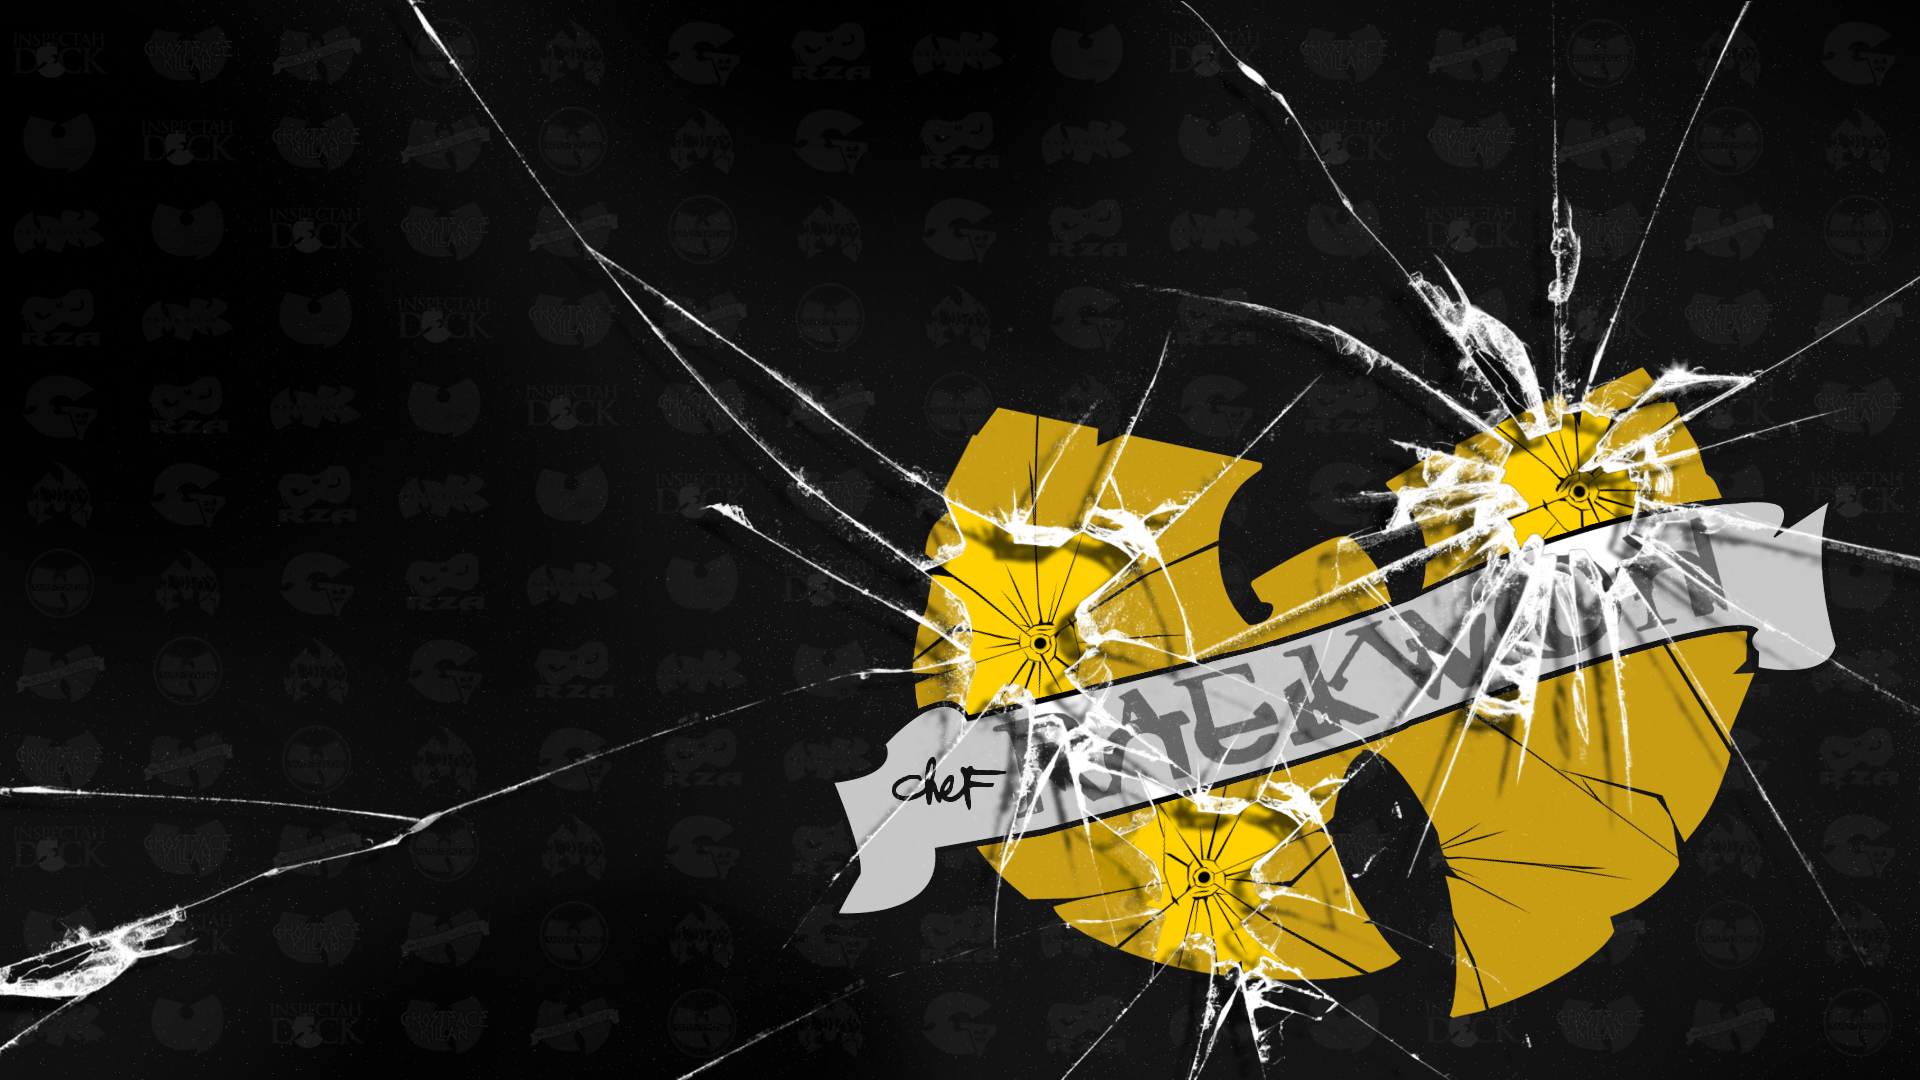 Raekwon Logo - Wu-Tang Clan Logos: Raekwon The Chef by uLtRaMa6nEt1cART on DeviantArt